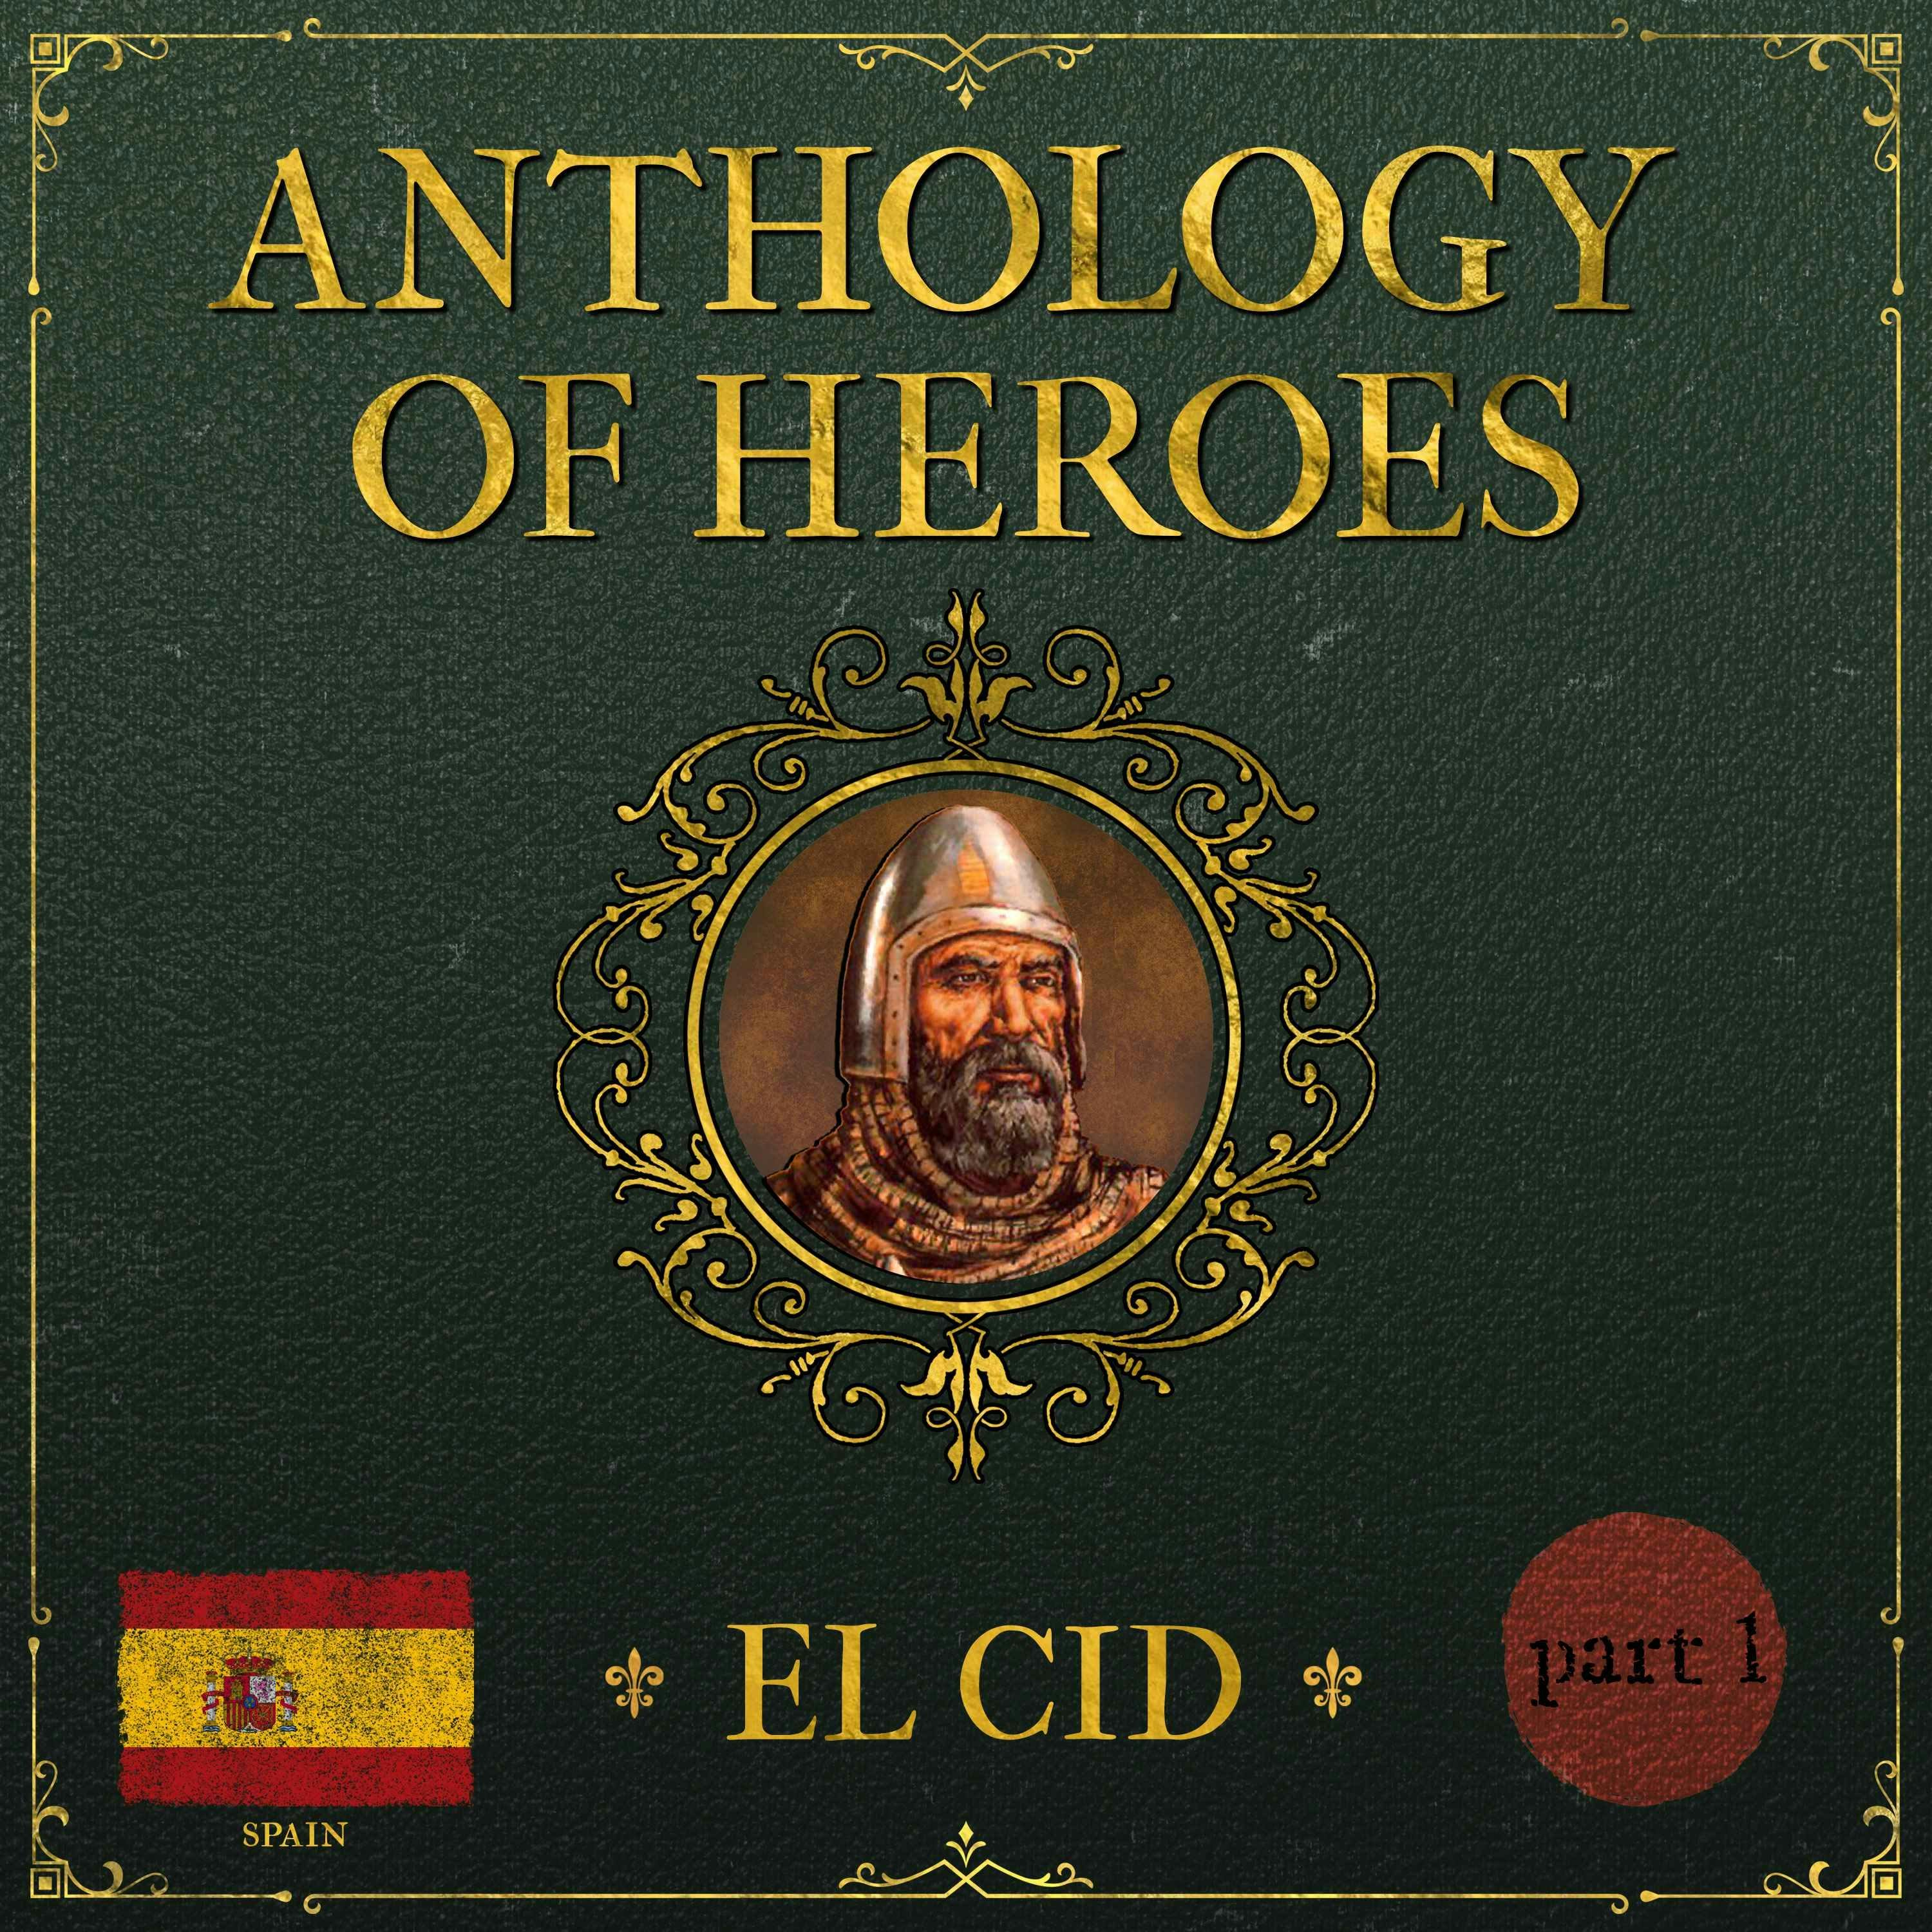 El Cid: The Man Behind the Legend | Part 1